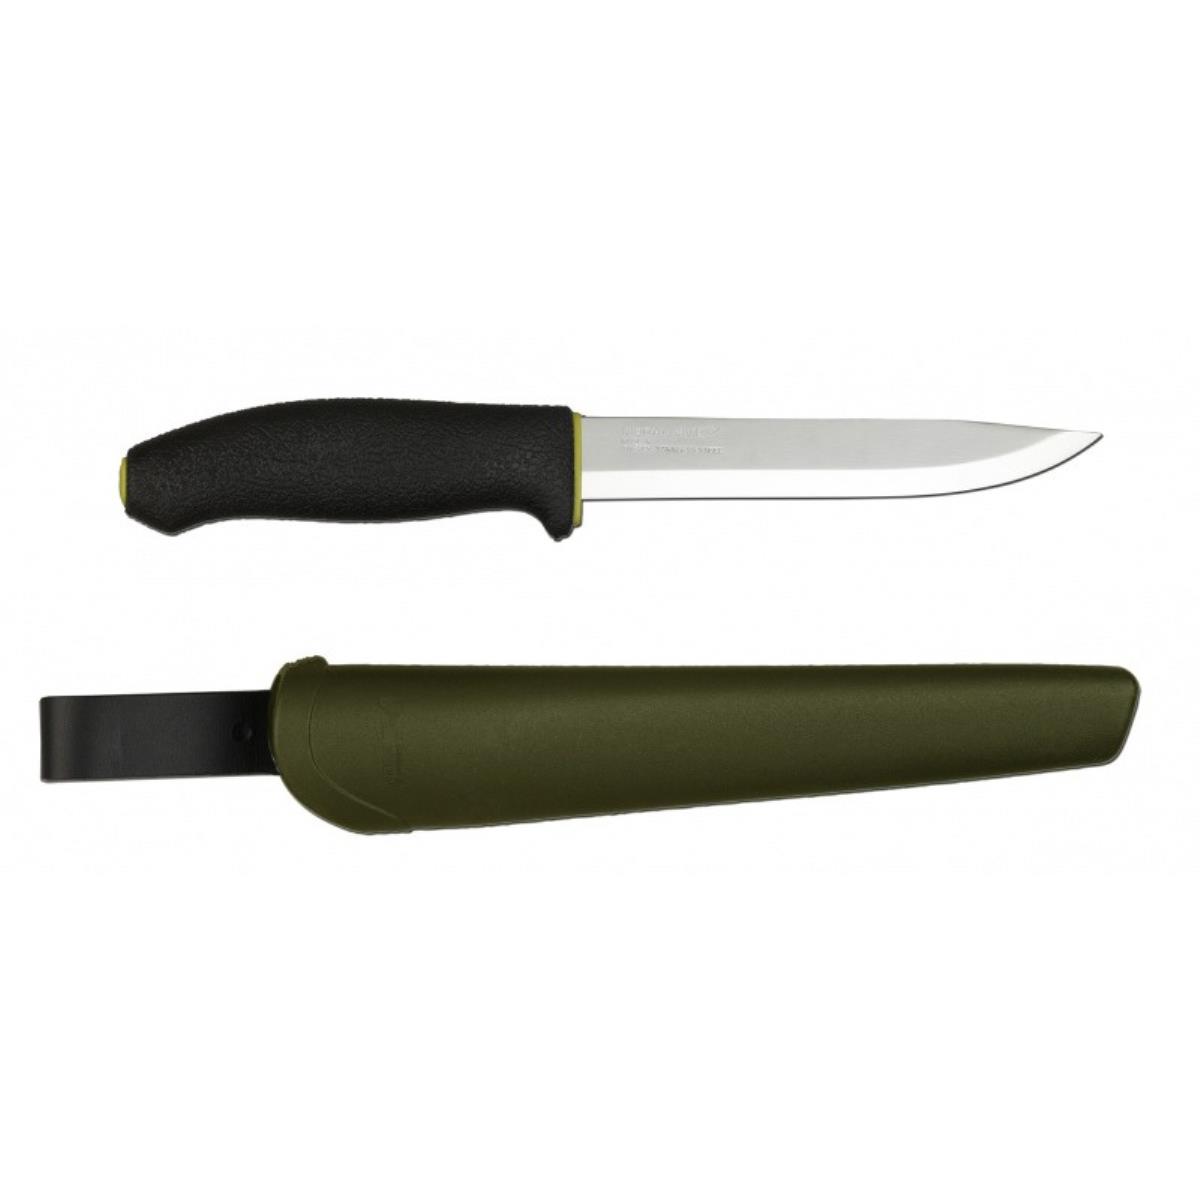 Нож Allround (12475) Morakniv нож kniv craftline q allround 0711 11481 morakniv